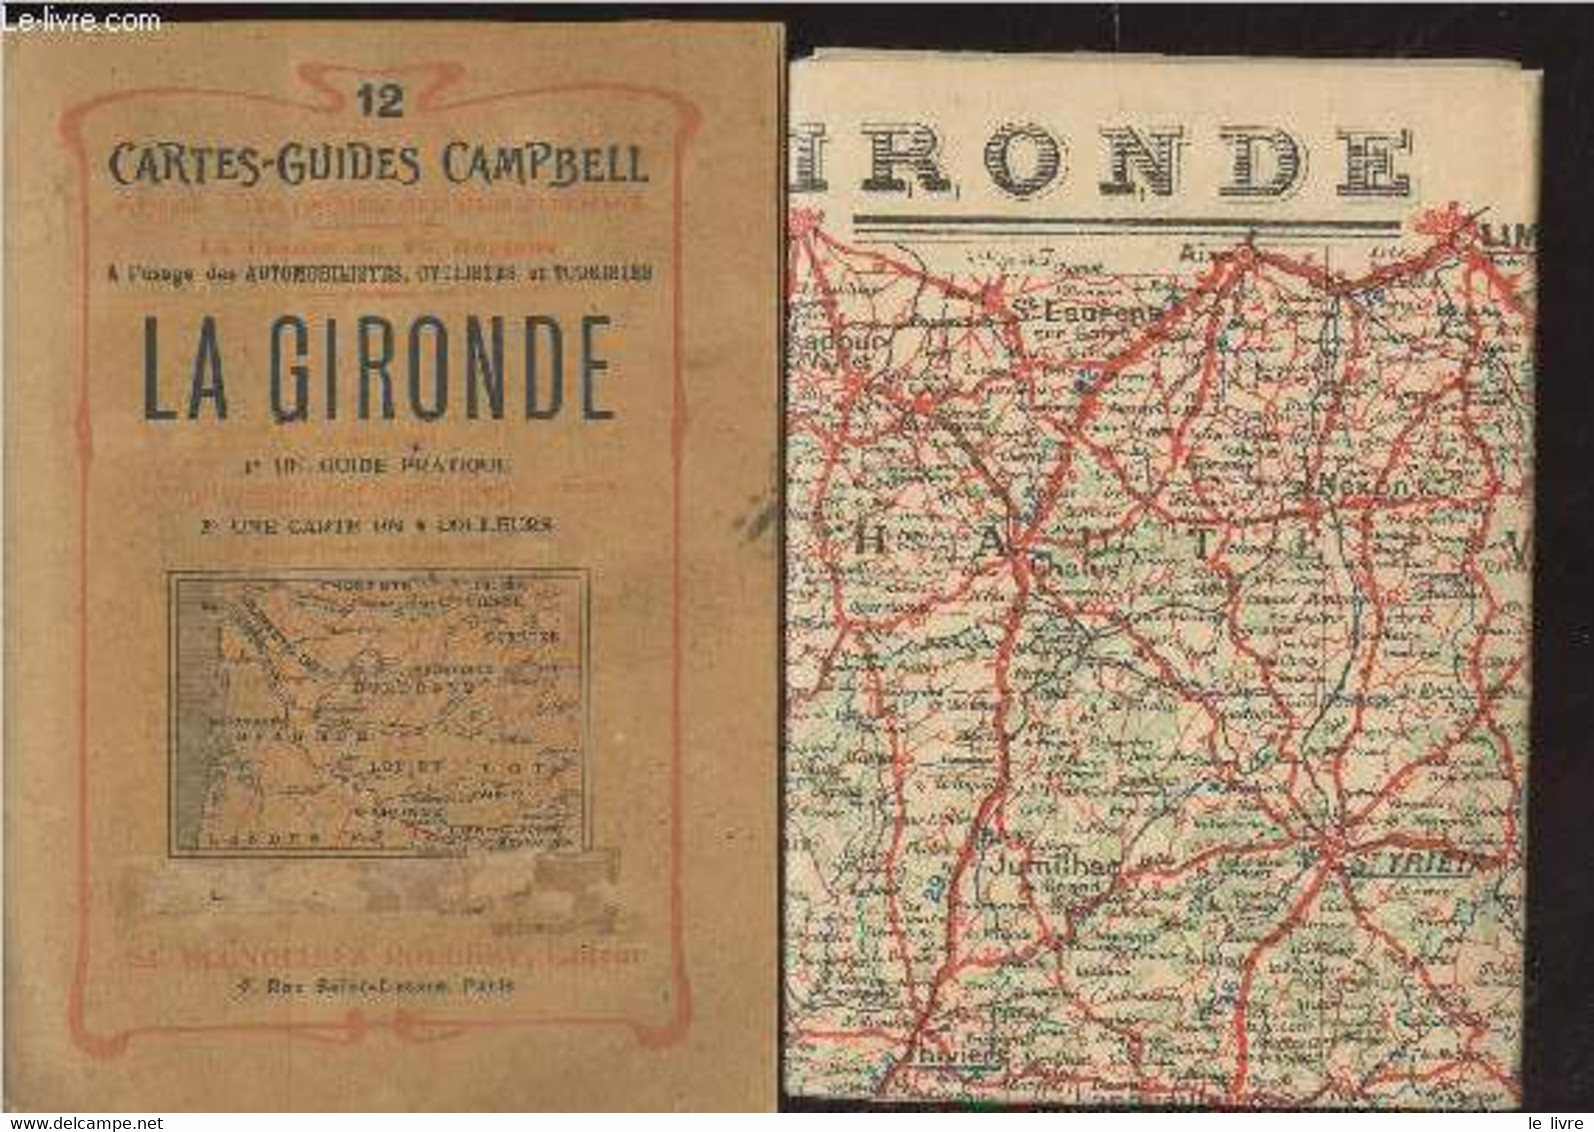 Cartes-Guides Campbelle N°12 : La Gironde - Collectif - 0 - Maps/Atlas